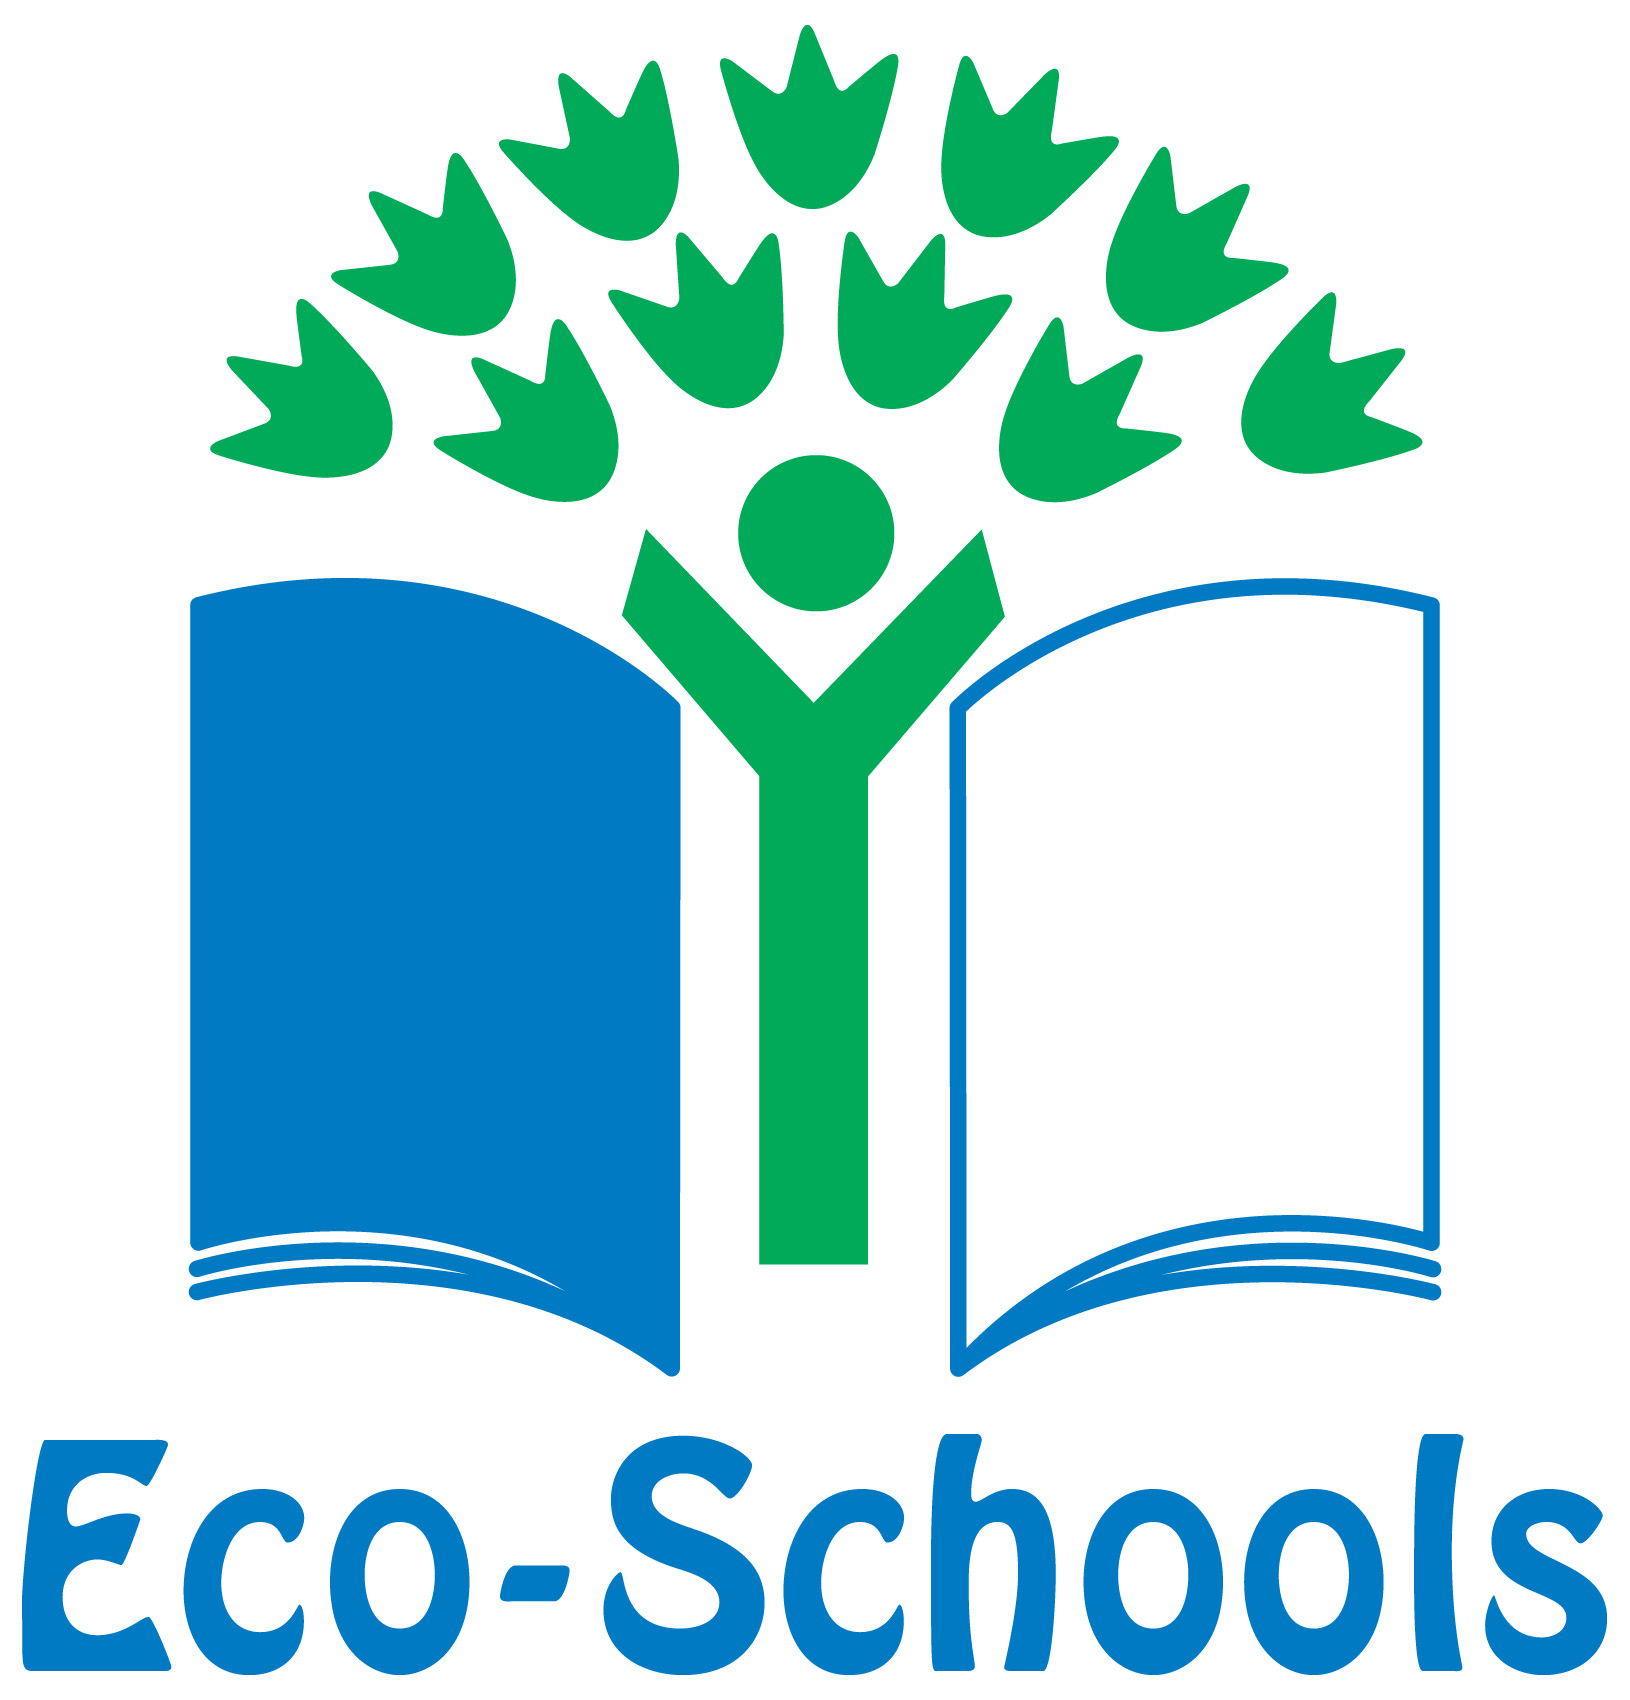 School logo clipart ideas